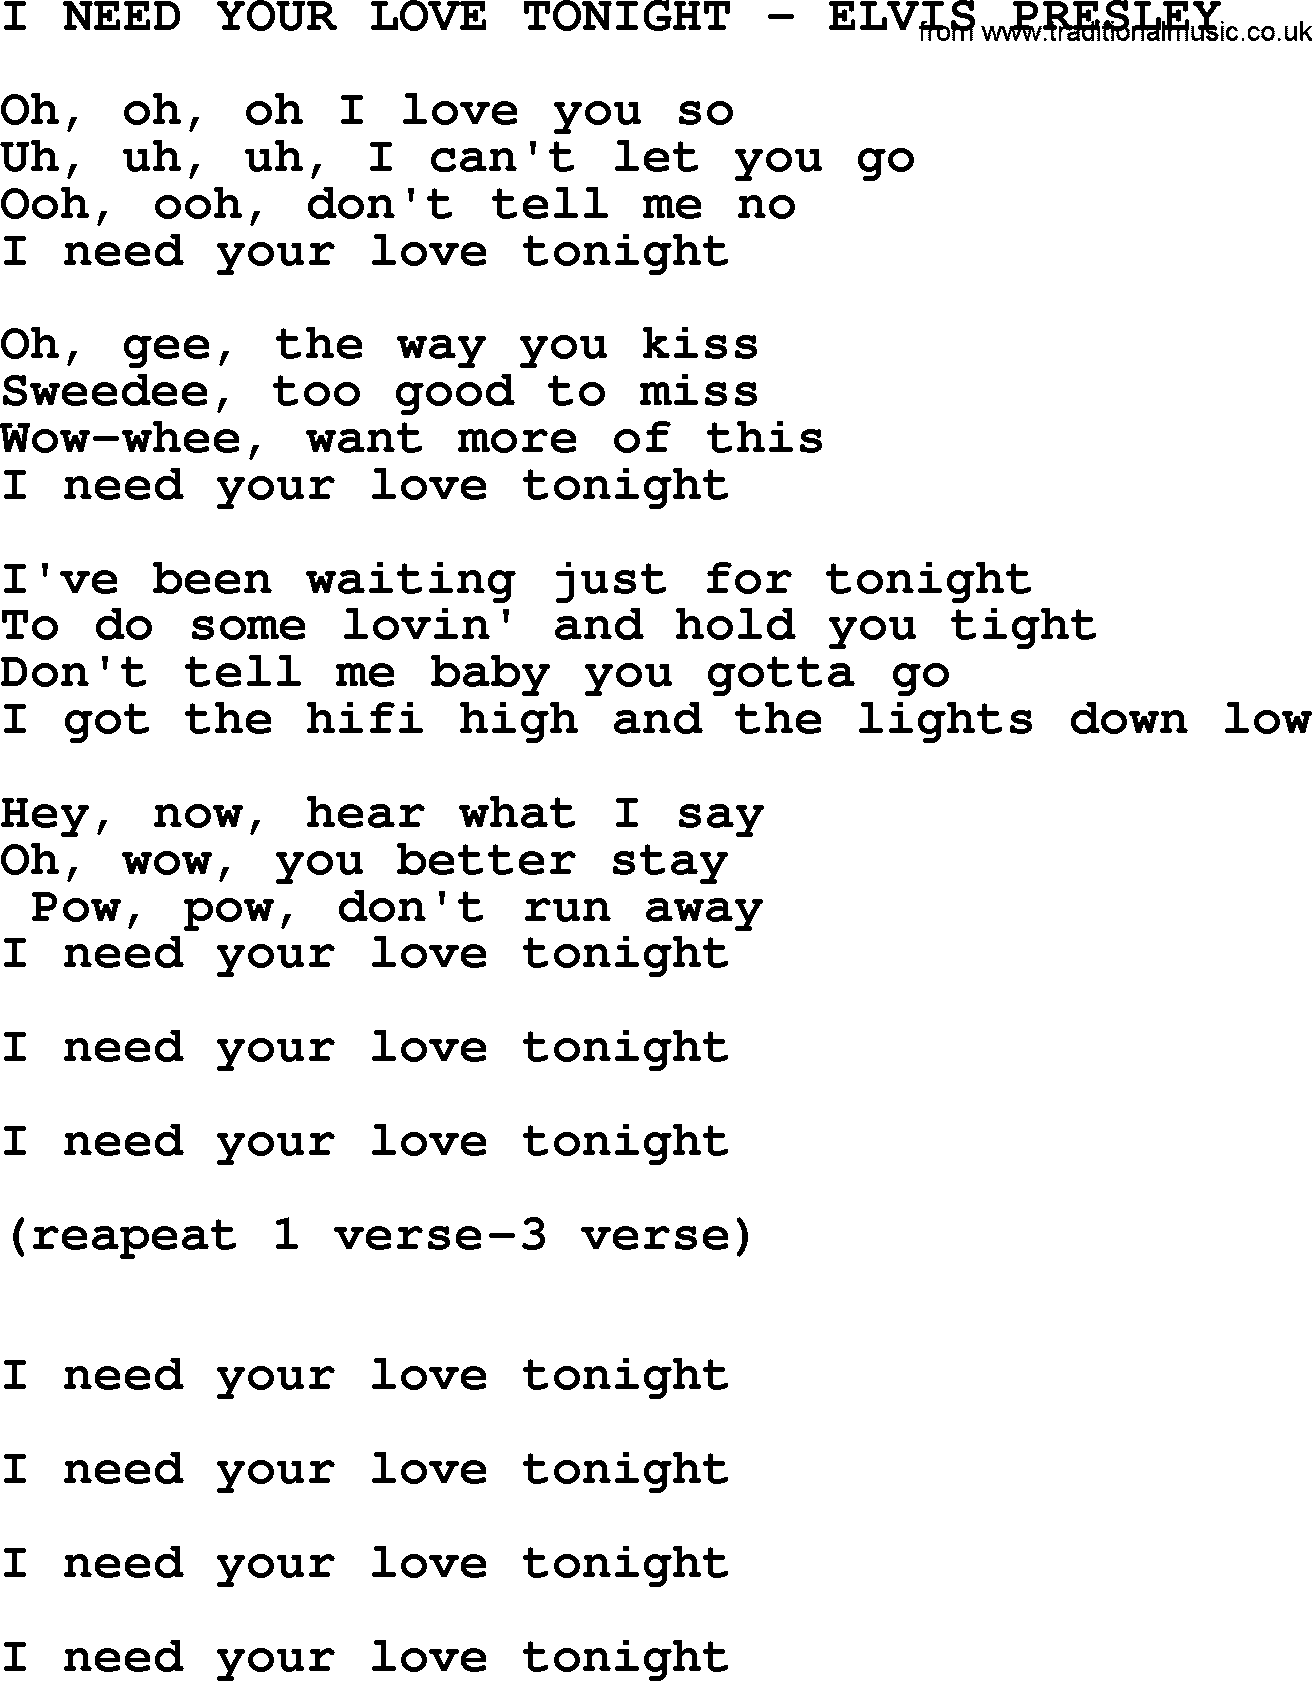 Elvis Presley song: I Need Your Love Tonight-Elvis Presley-.txt lyrics and chords